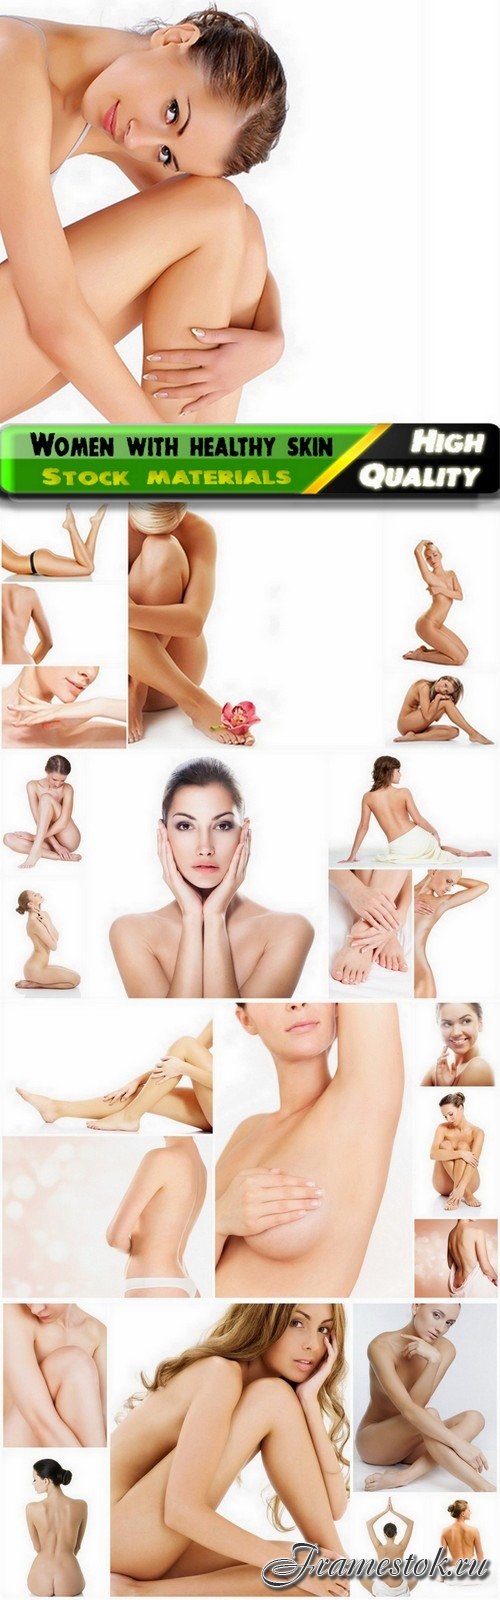 Nude women with healthy skin - 25 HQ Jpg